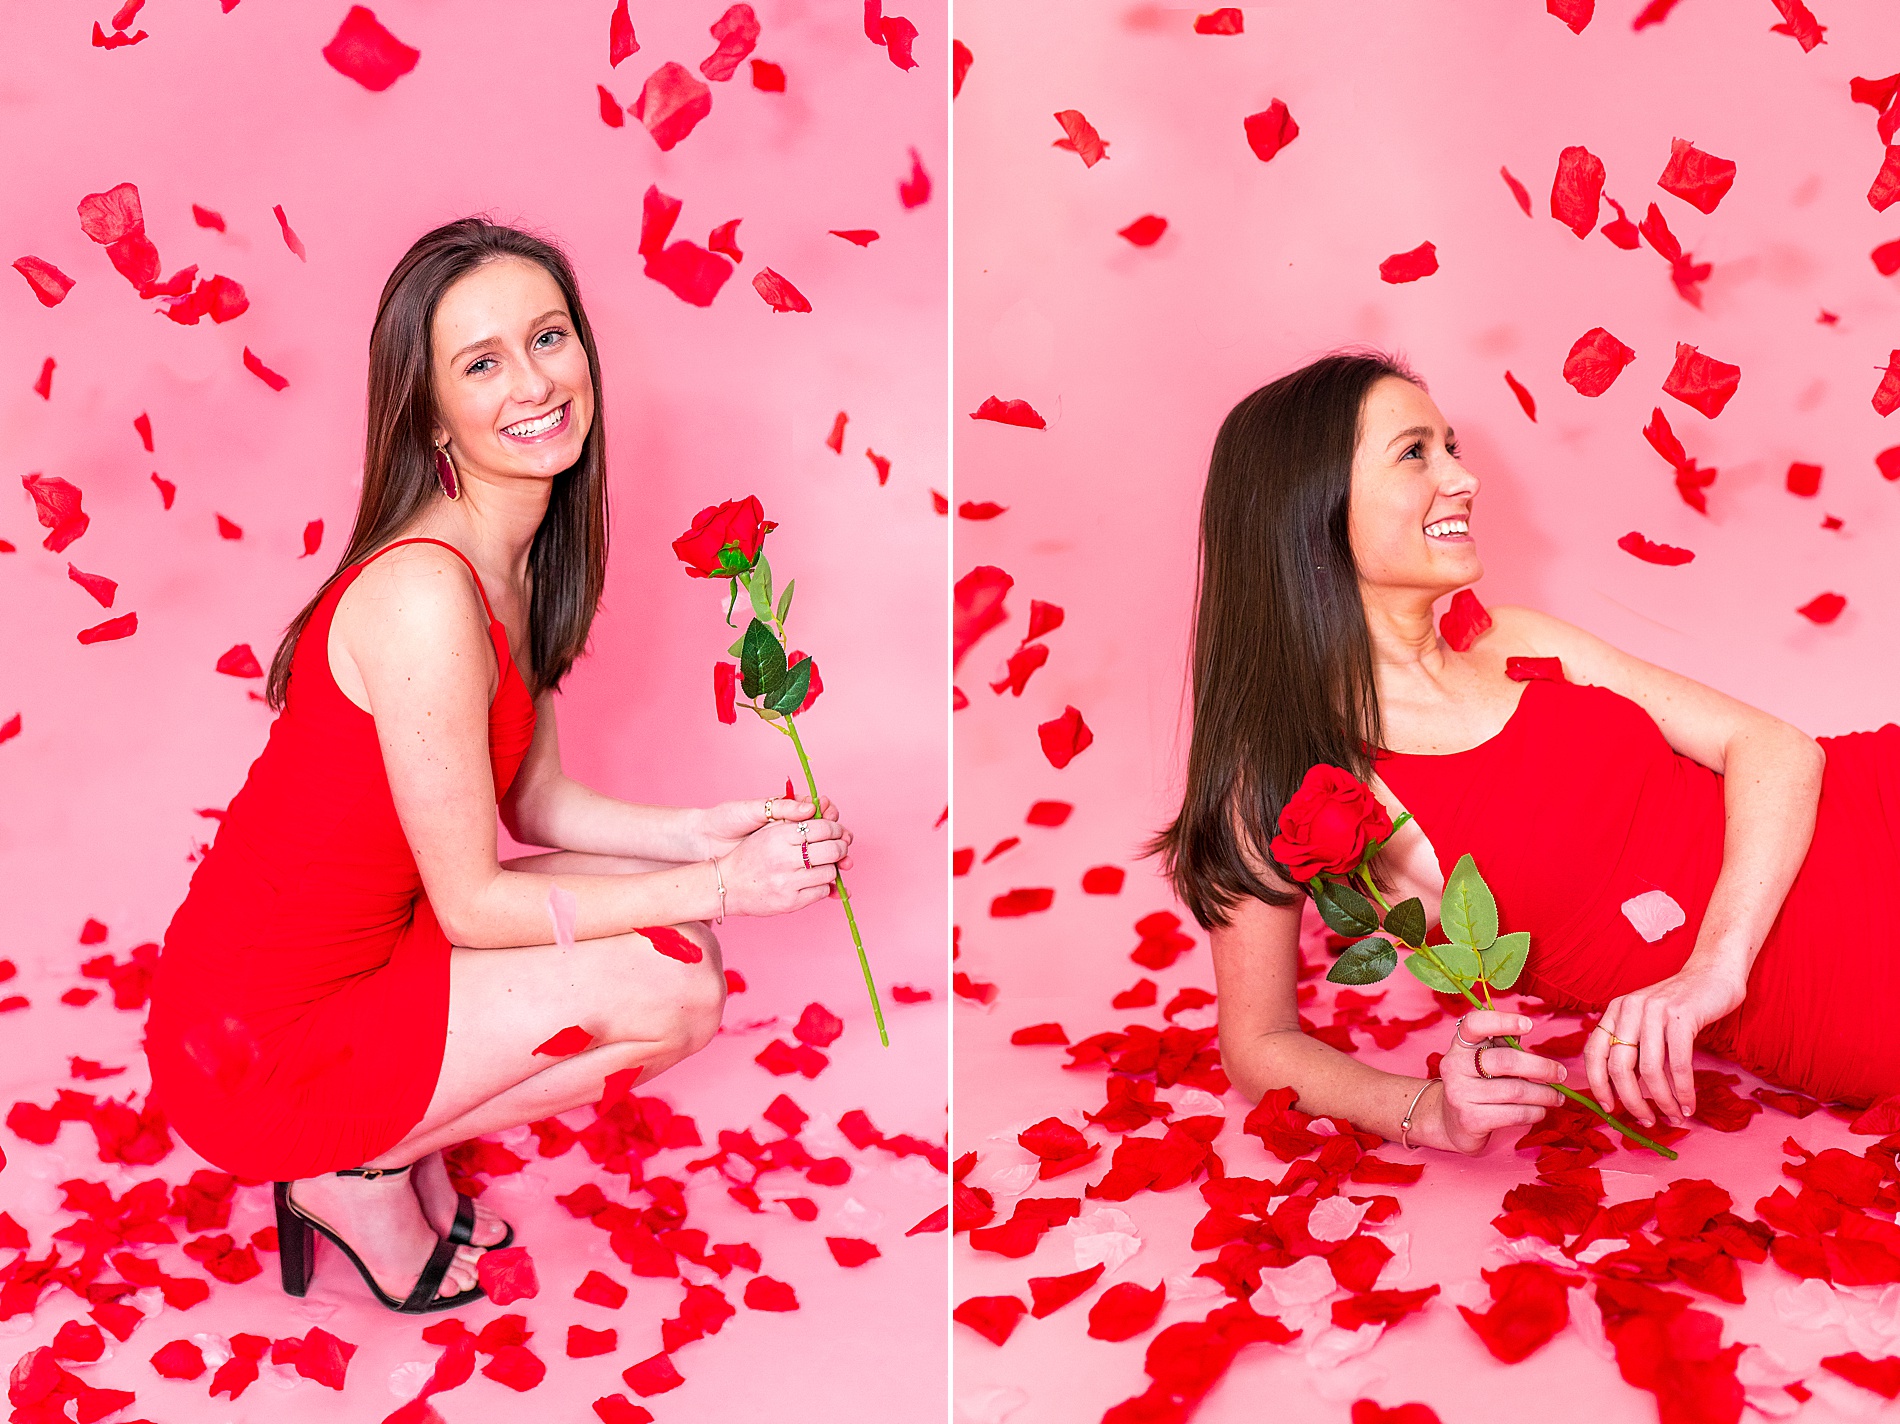 Spokesmodel team has fun on shoot with rose petals